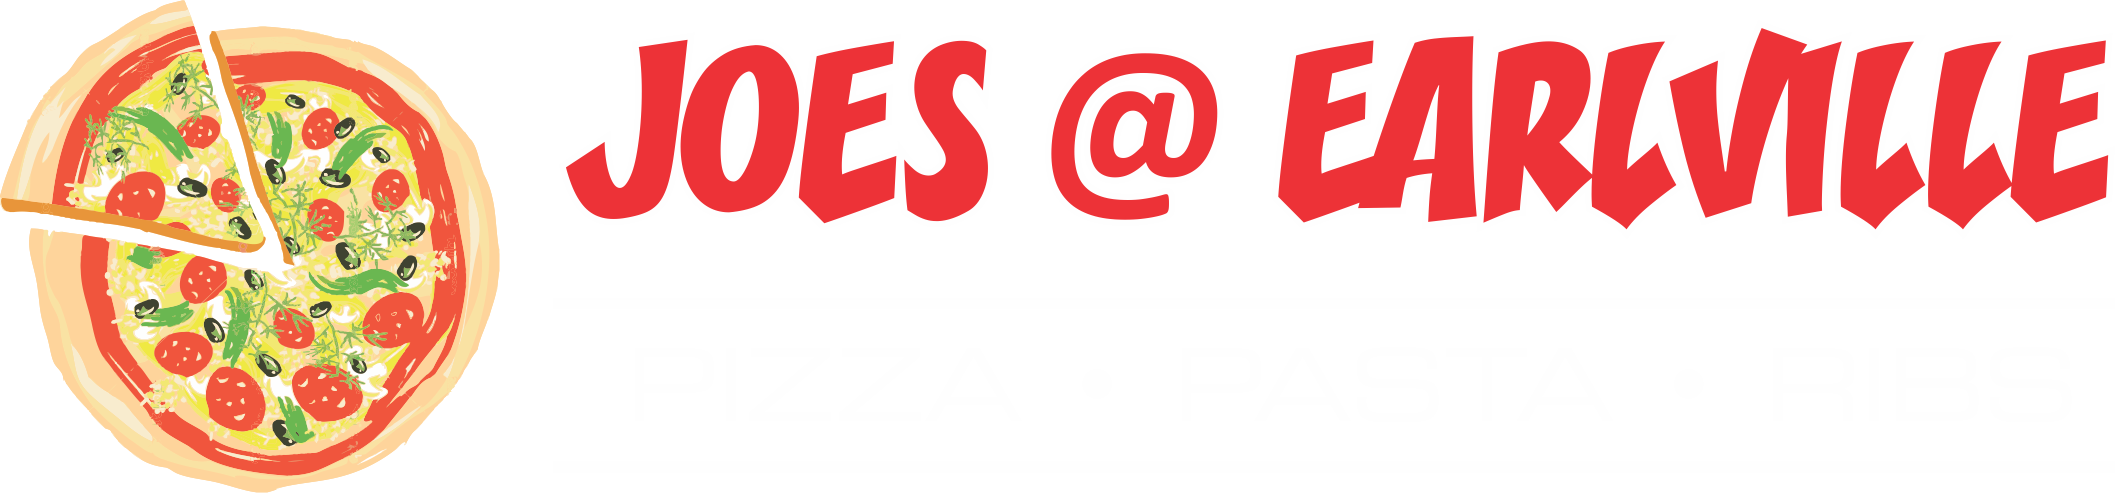 Joes Pizza Earlville